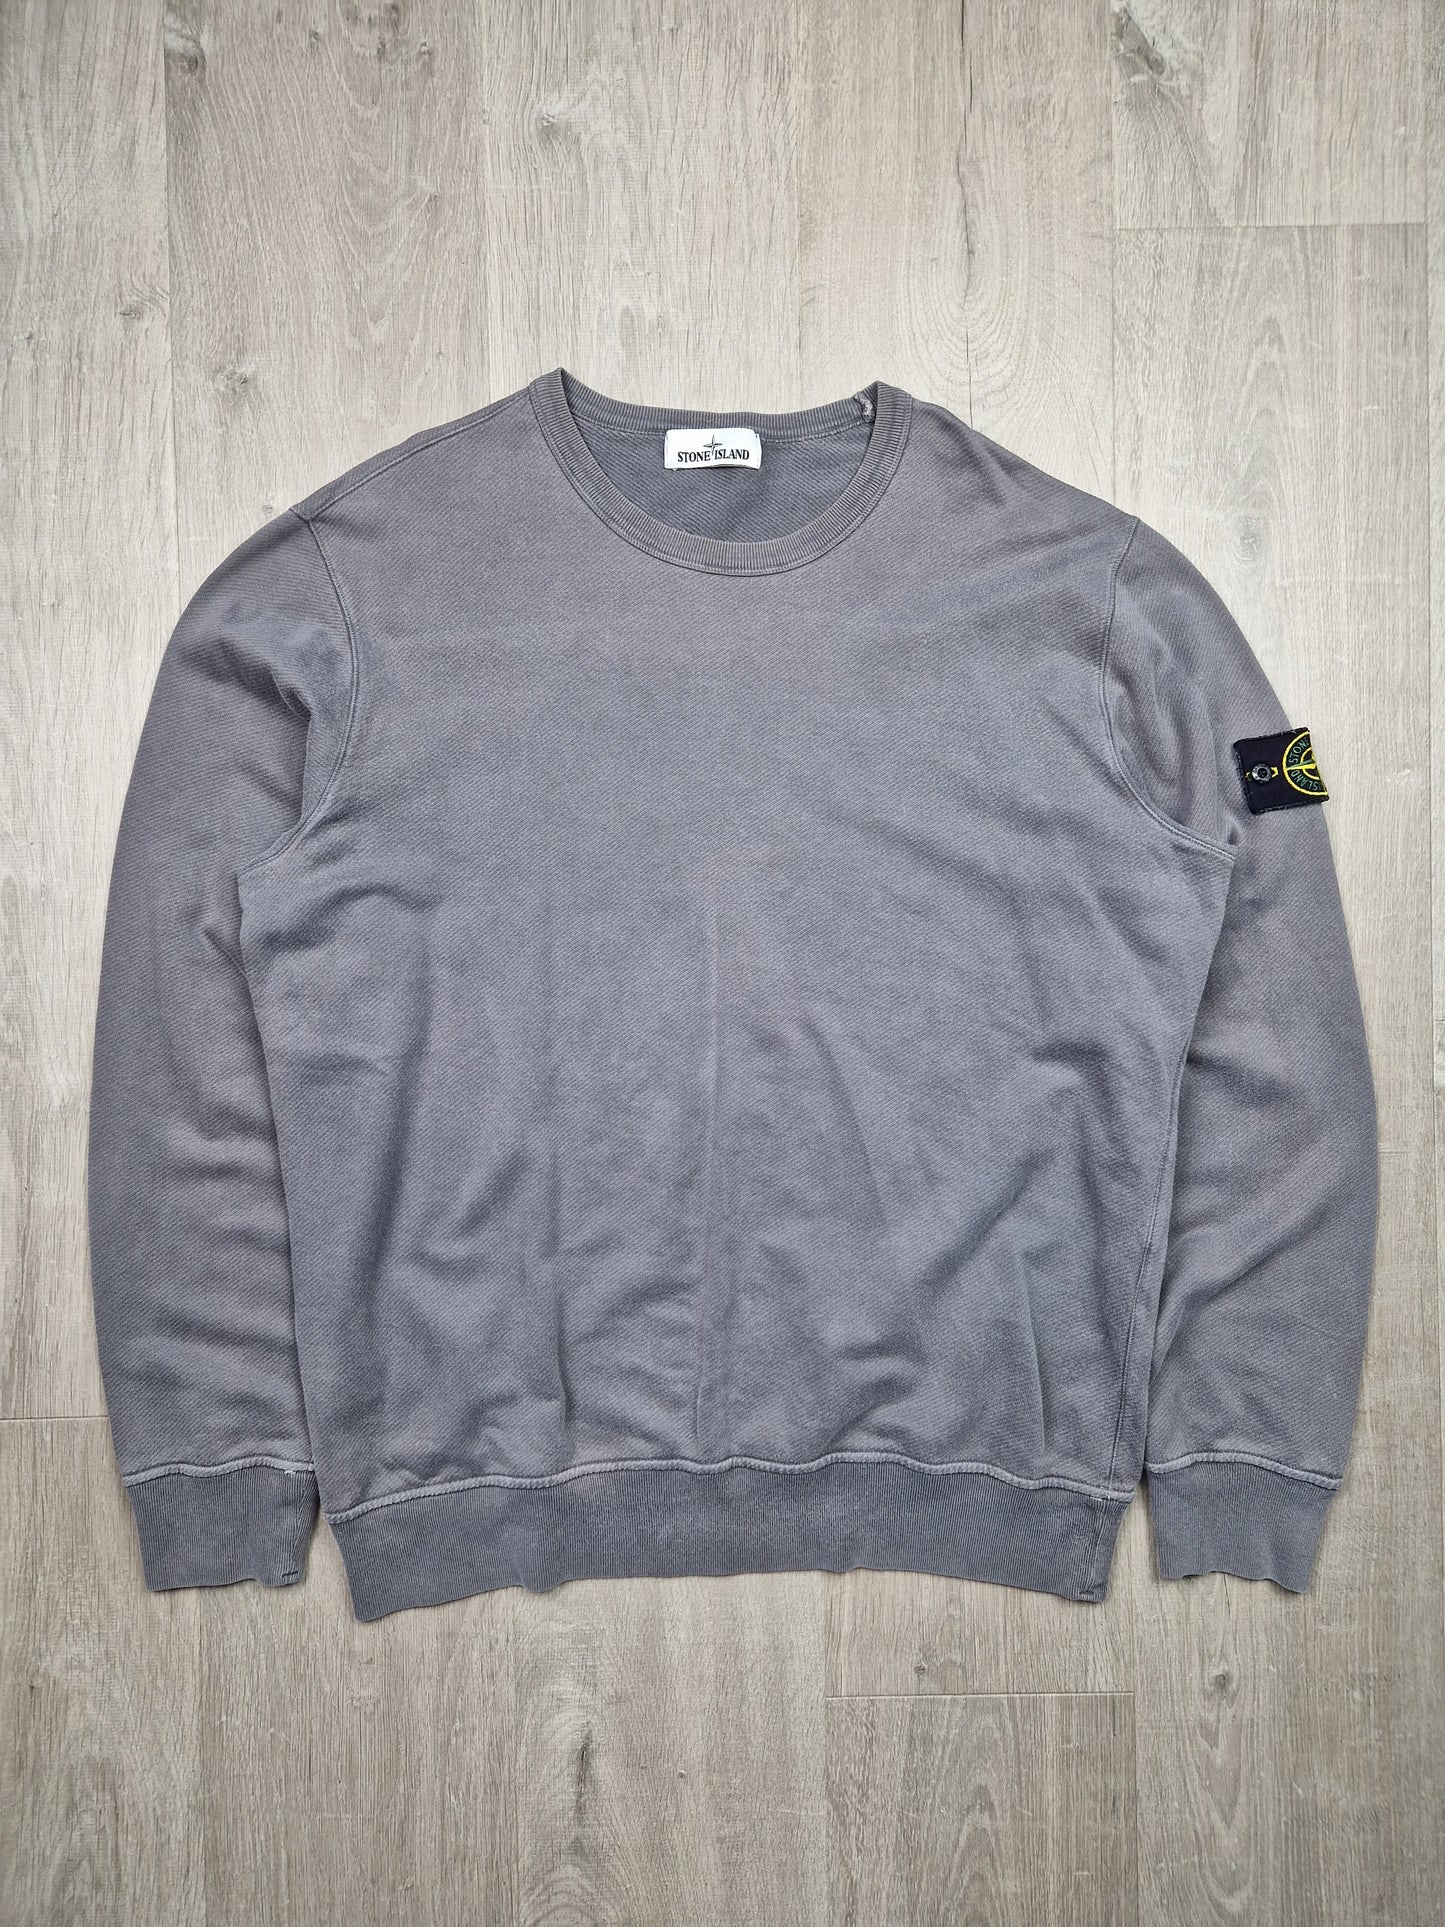 Stone Island sweatshirt (XL)